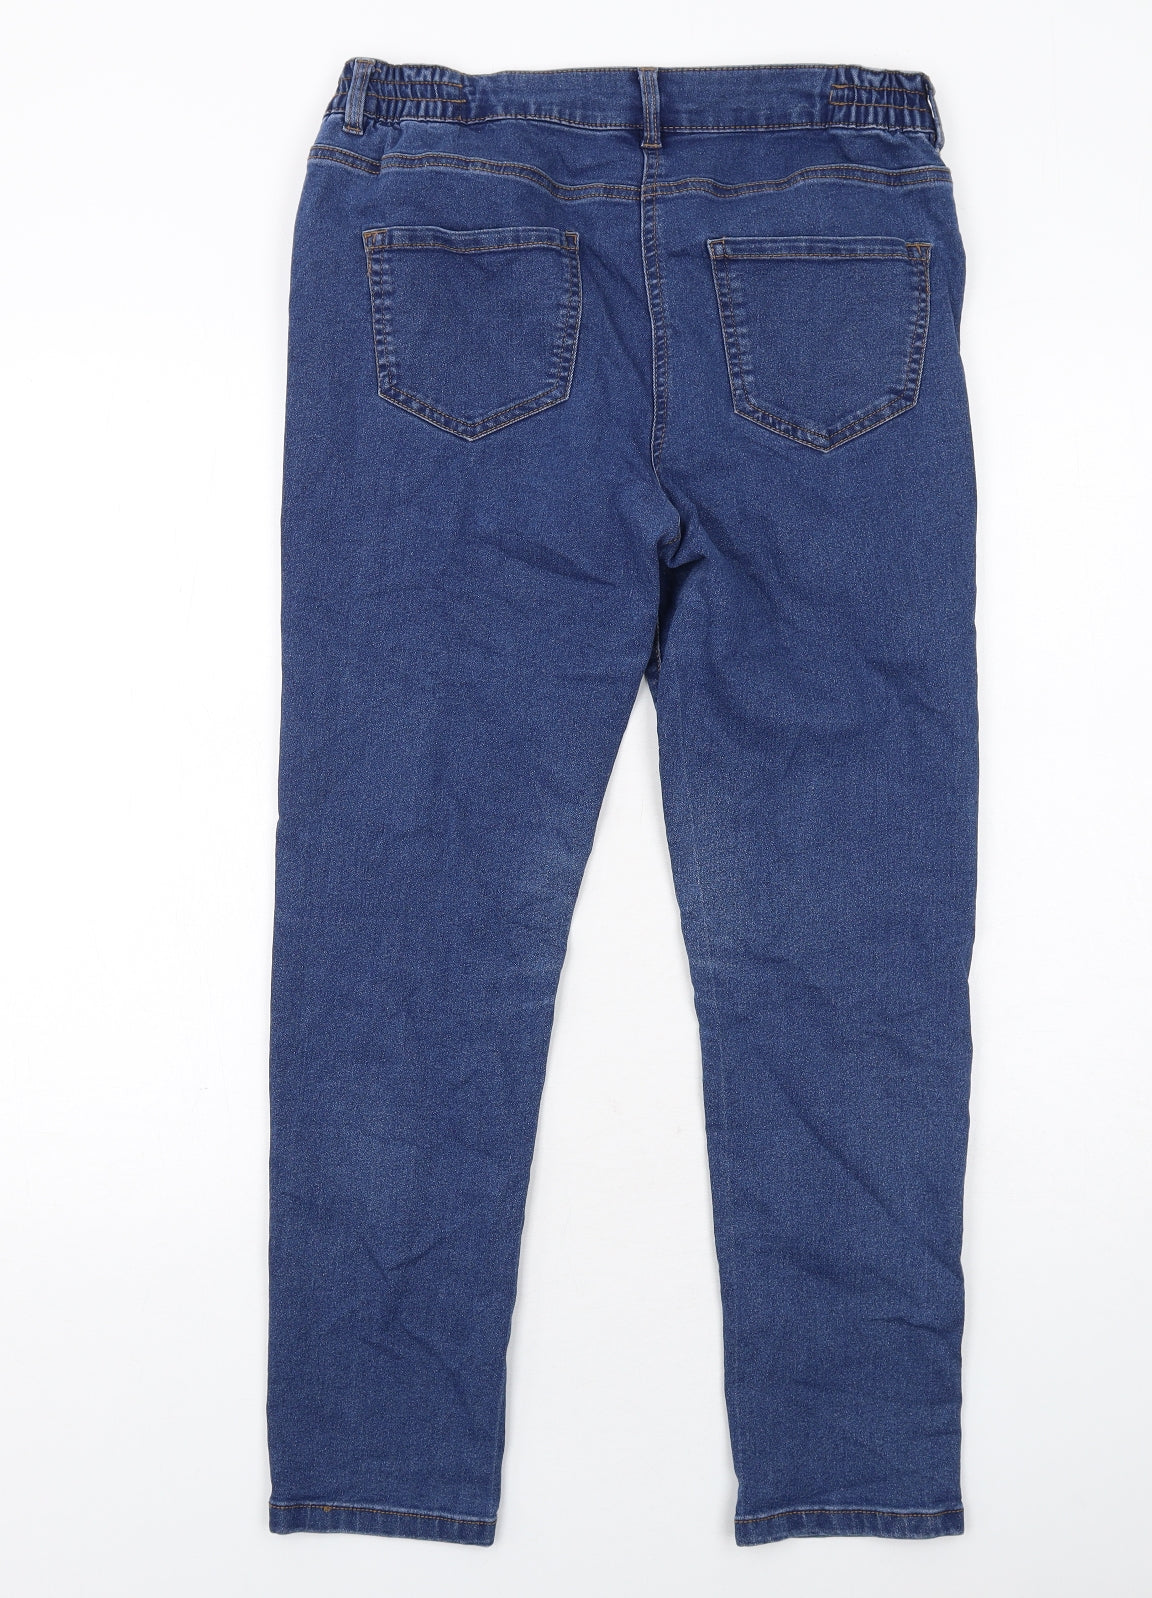 Bonmarché Womens Blue Cotton Skinny Jeans Size 12 Regular Zip